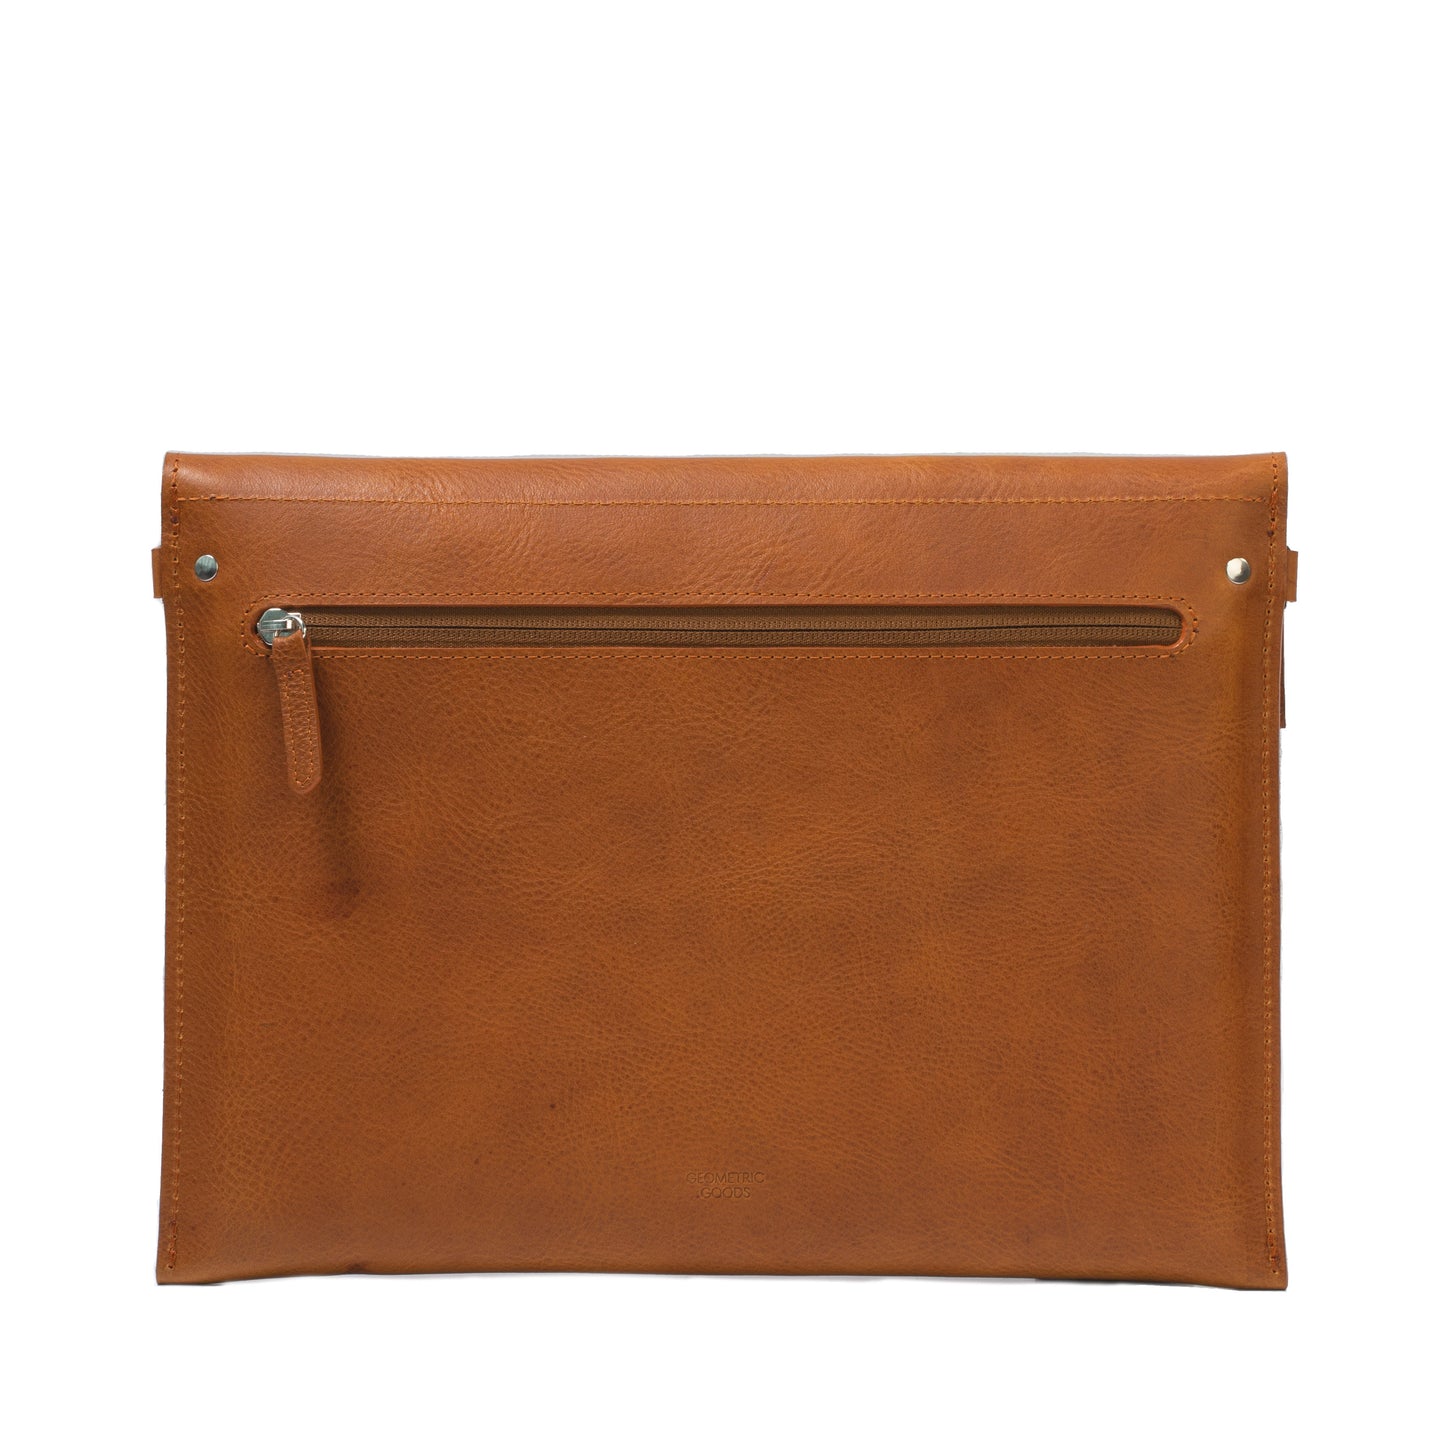 Leather Bag for iPad - The Minimalist 2.0-1